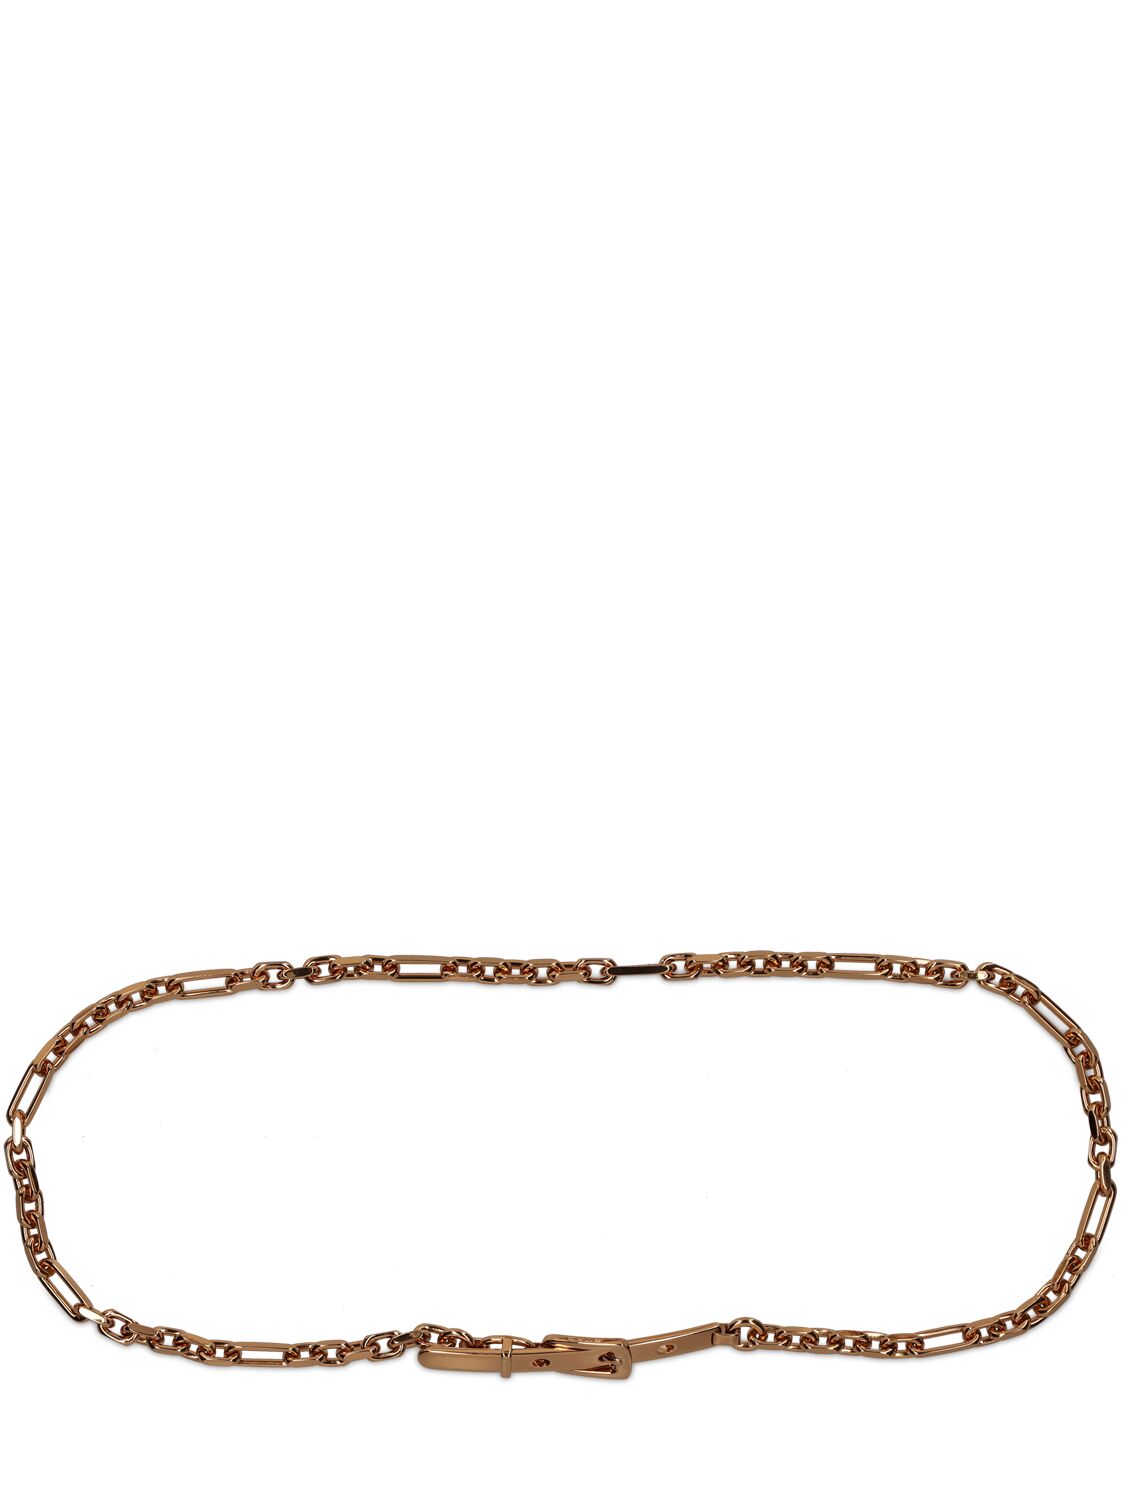 Image of Chain Belt